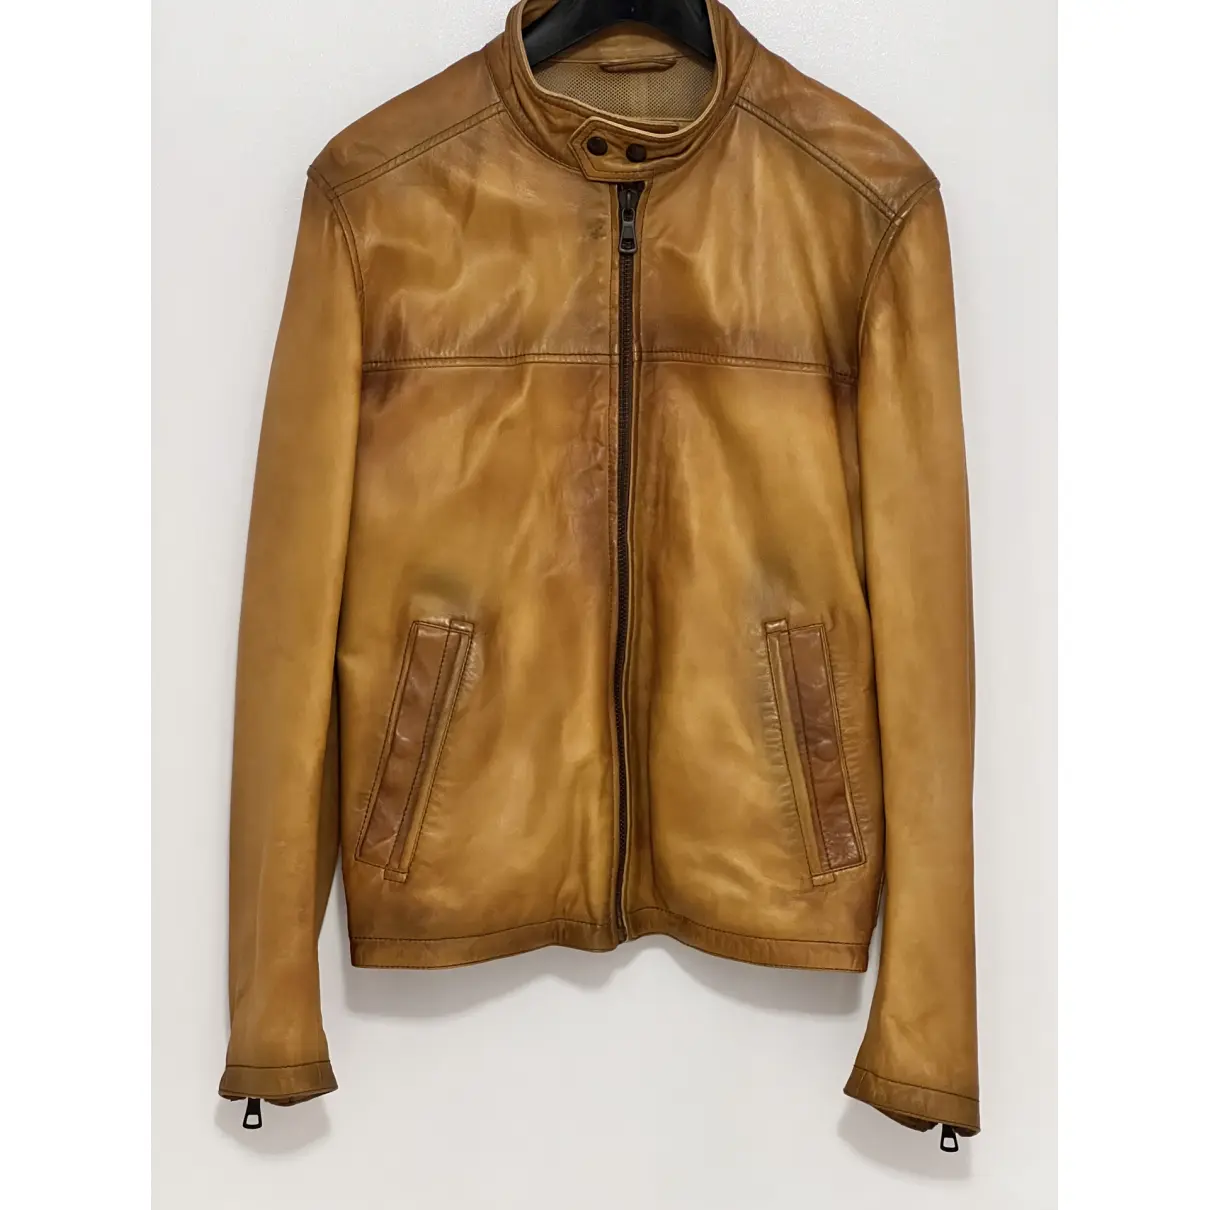 Buy Pal Zileri Leather jacket online